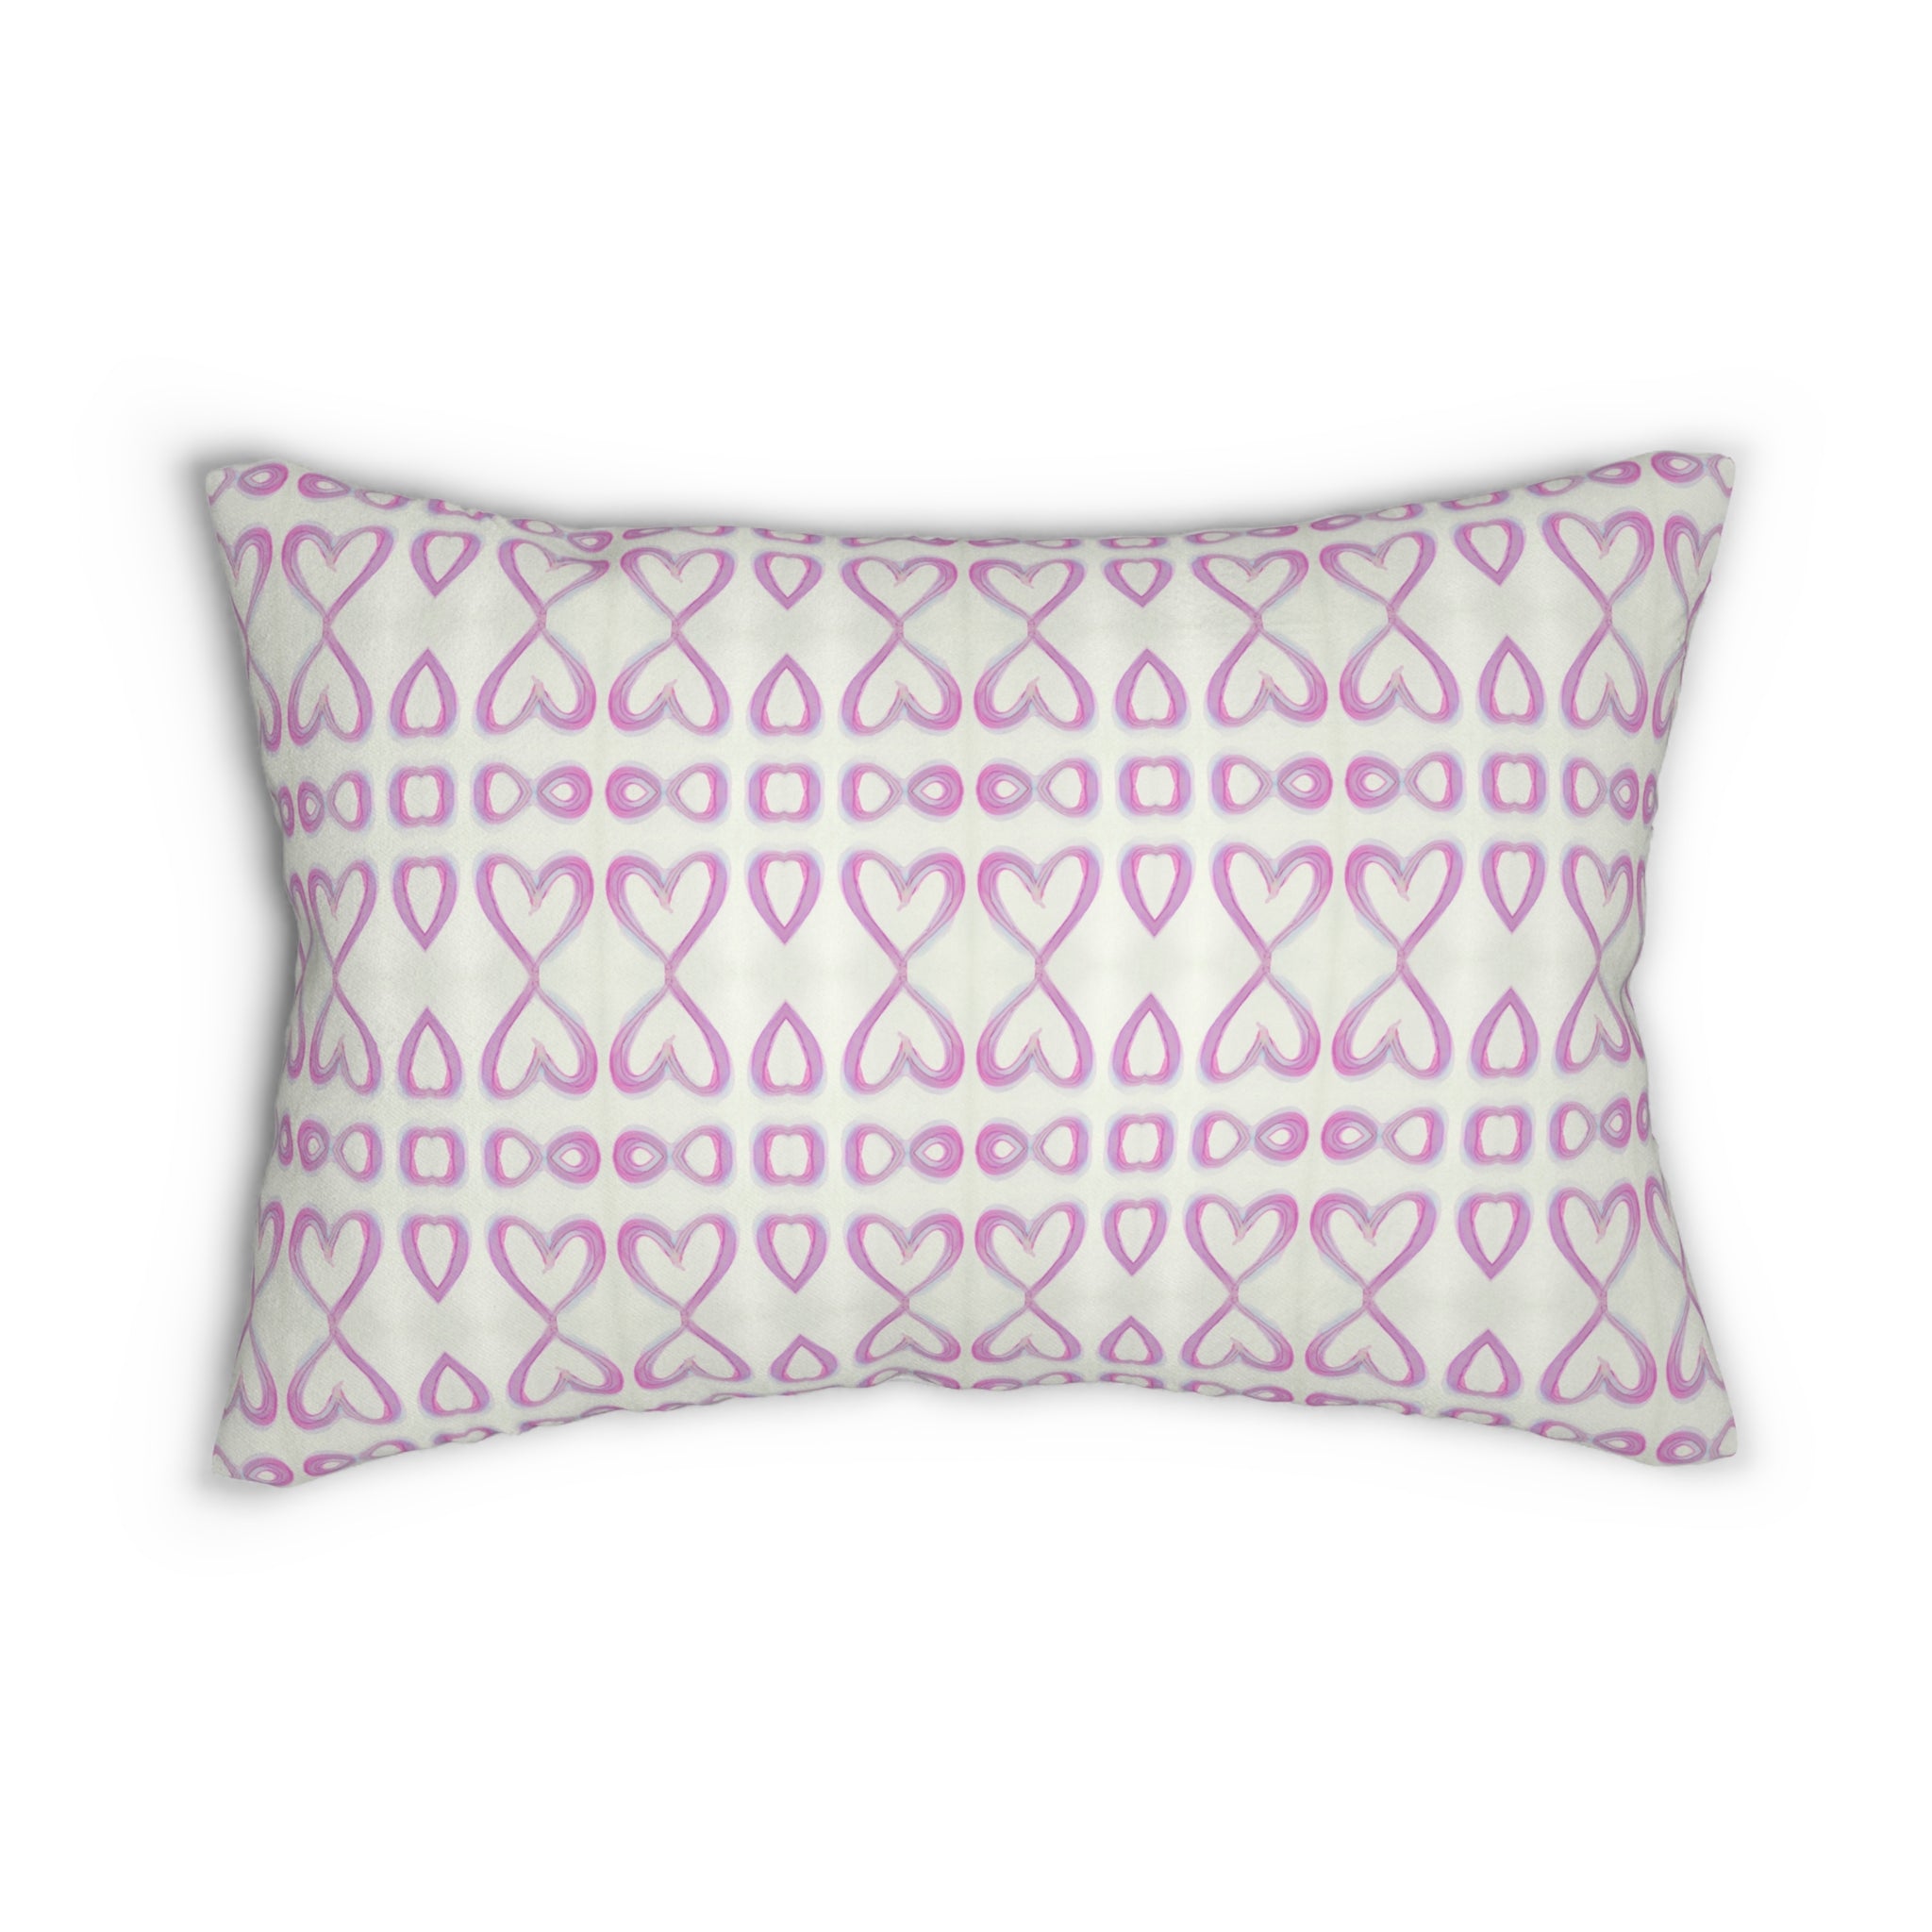 Open Pink Hearts - 13 x 22 Lumbar Pillow (OH/P1A)